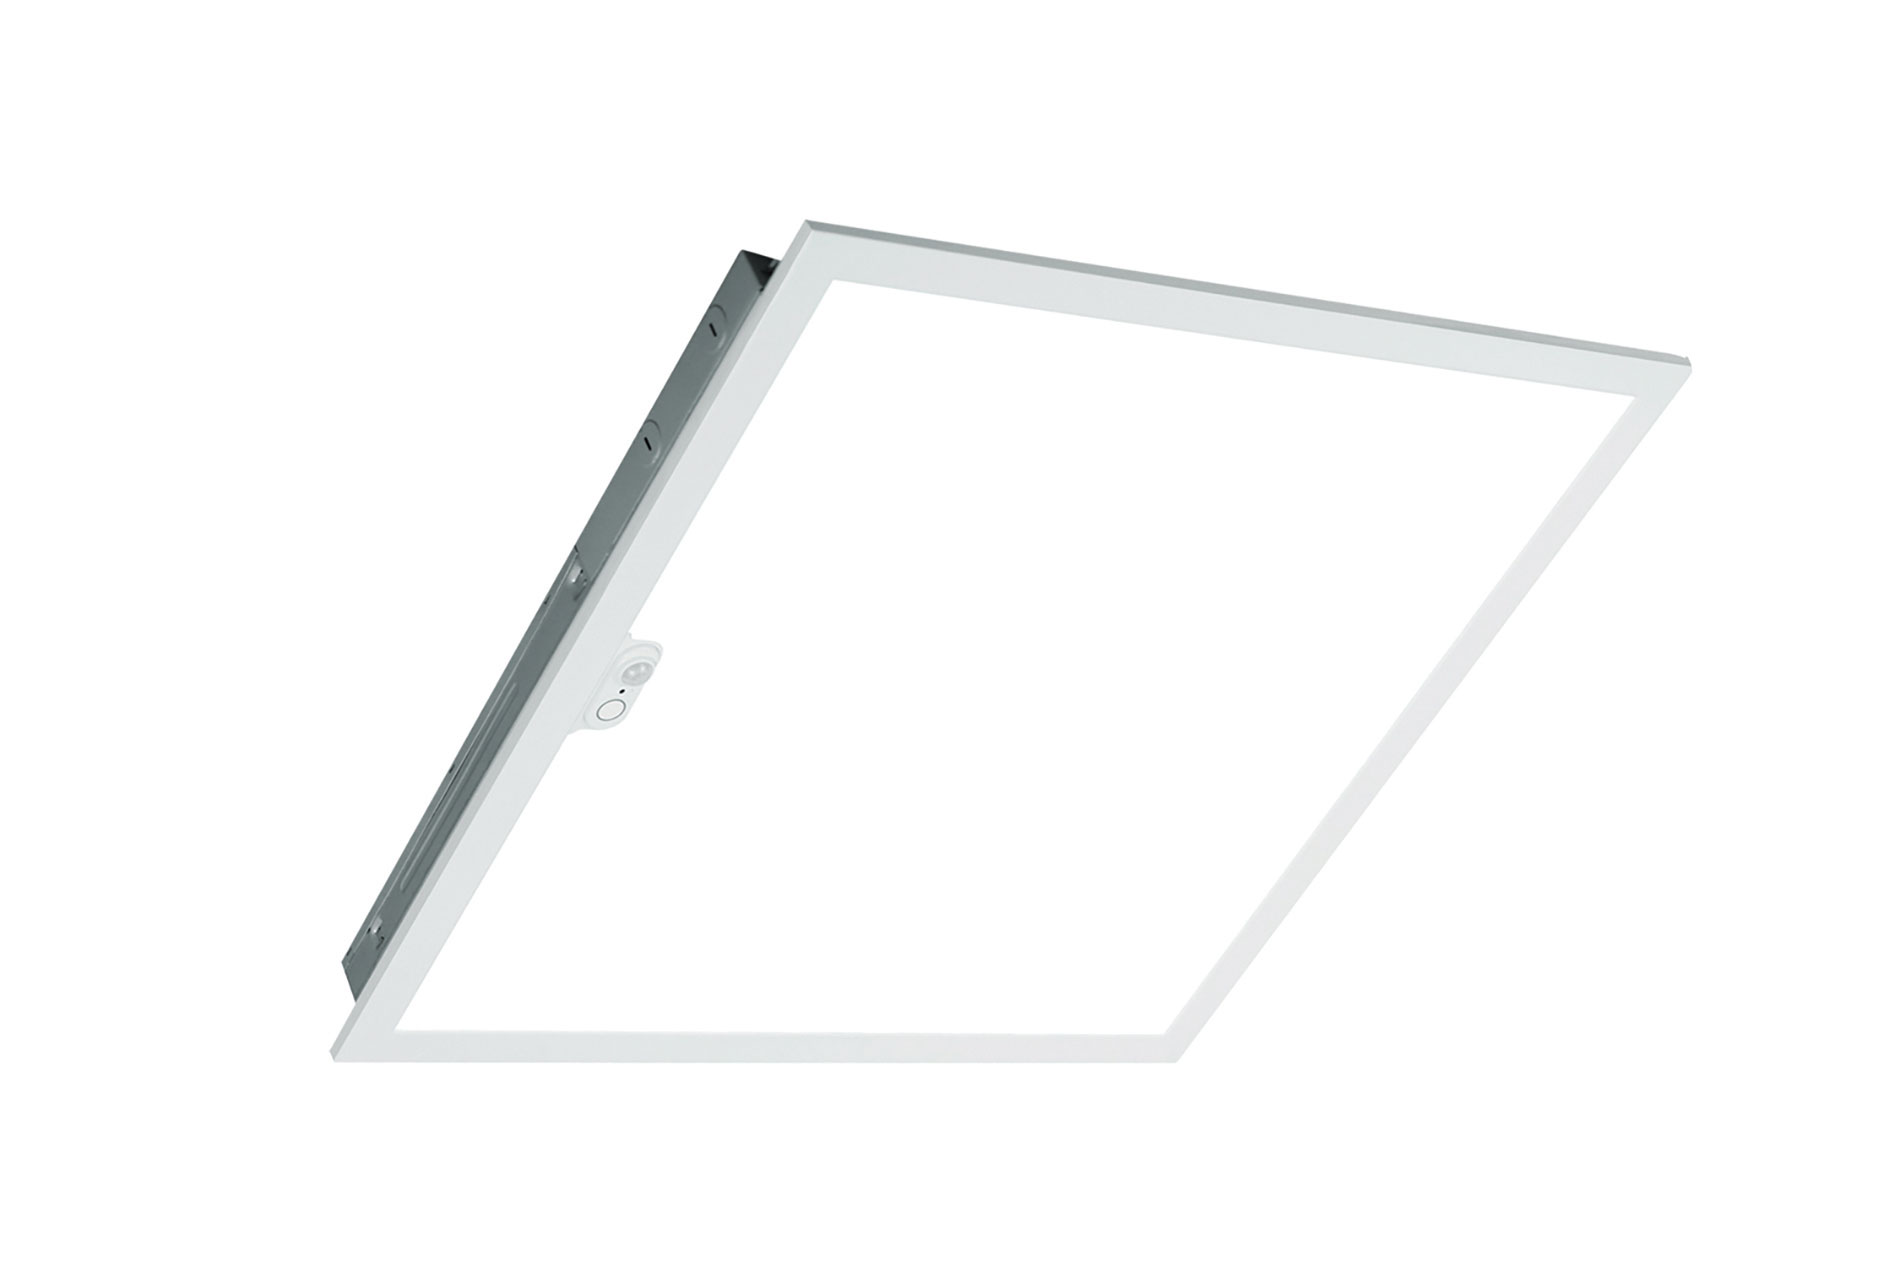 White, lit-up square. Image by LEDVance.